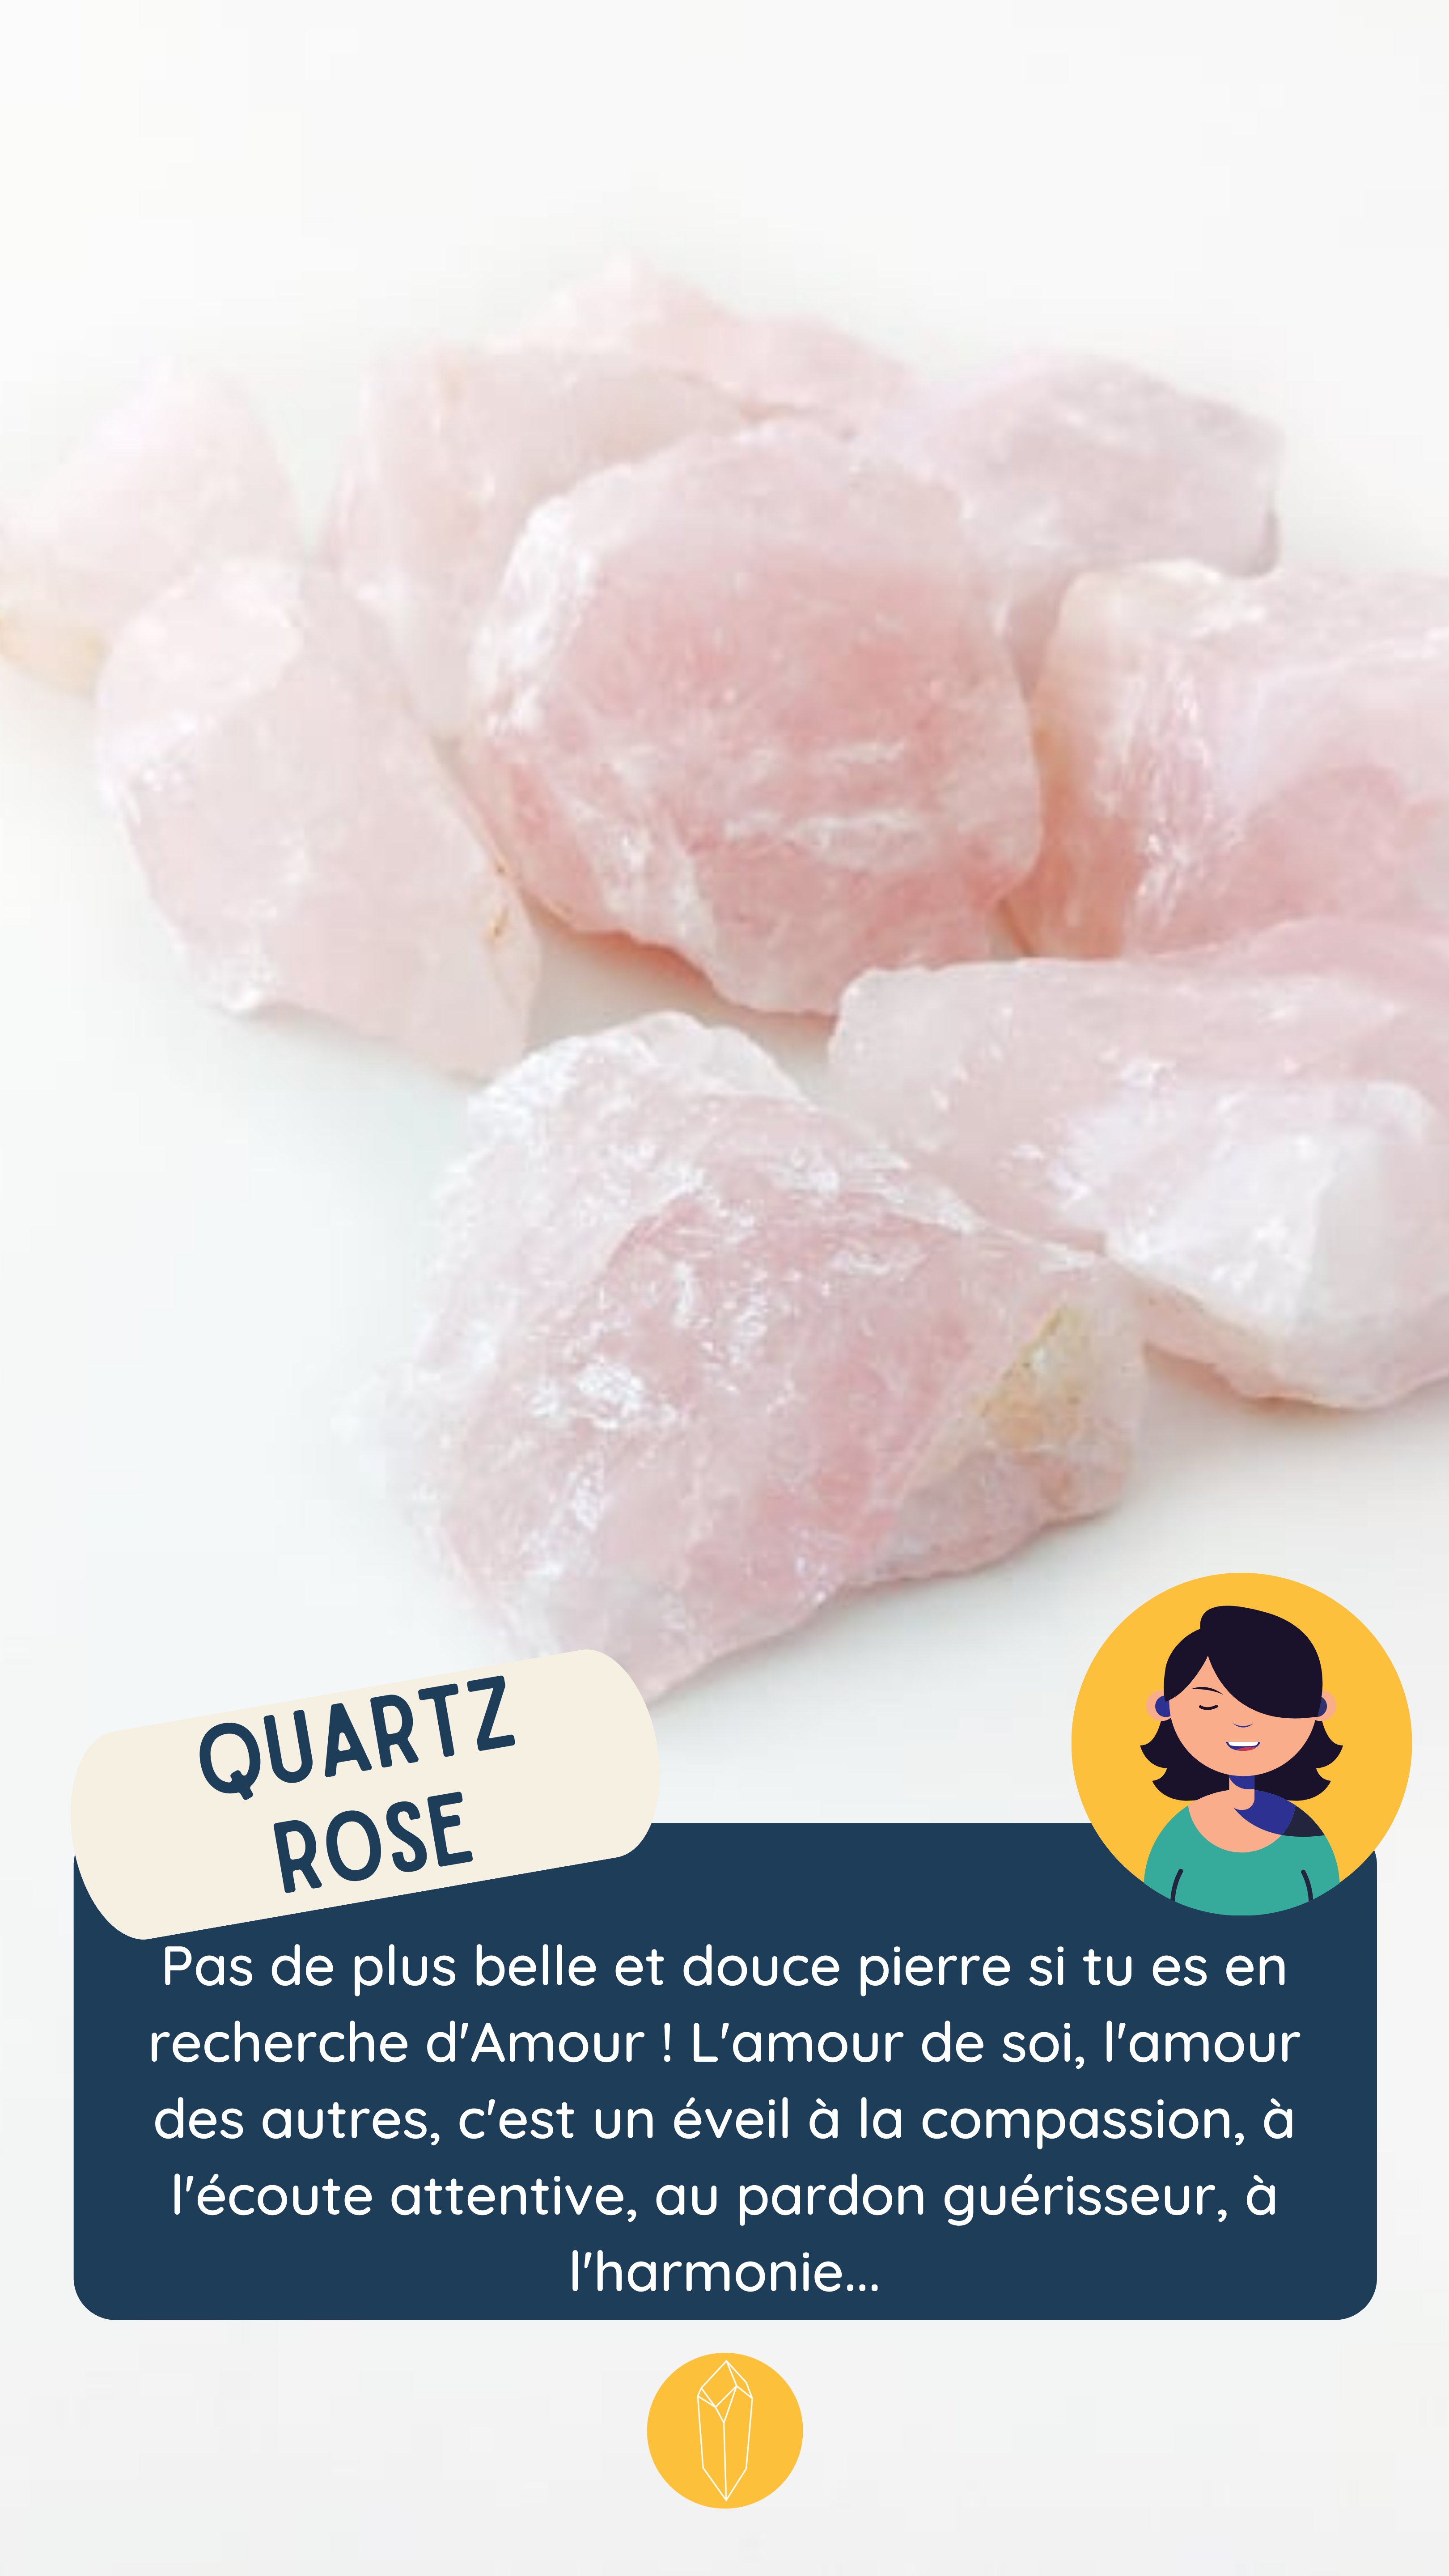 bienfaits du quartz rose